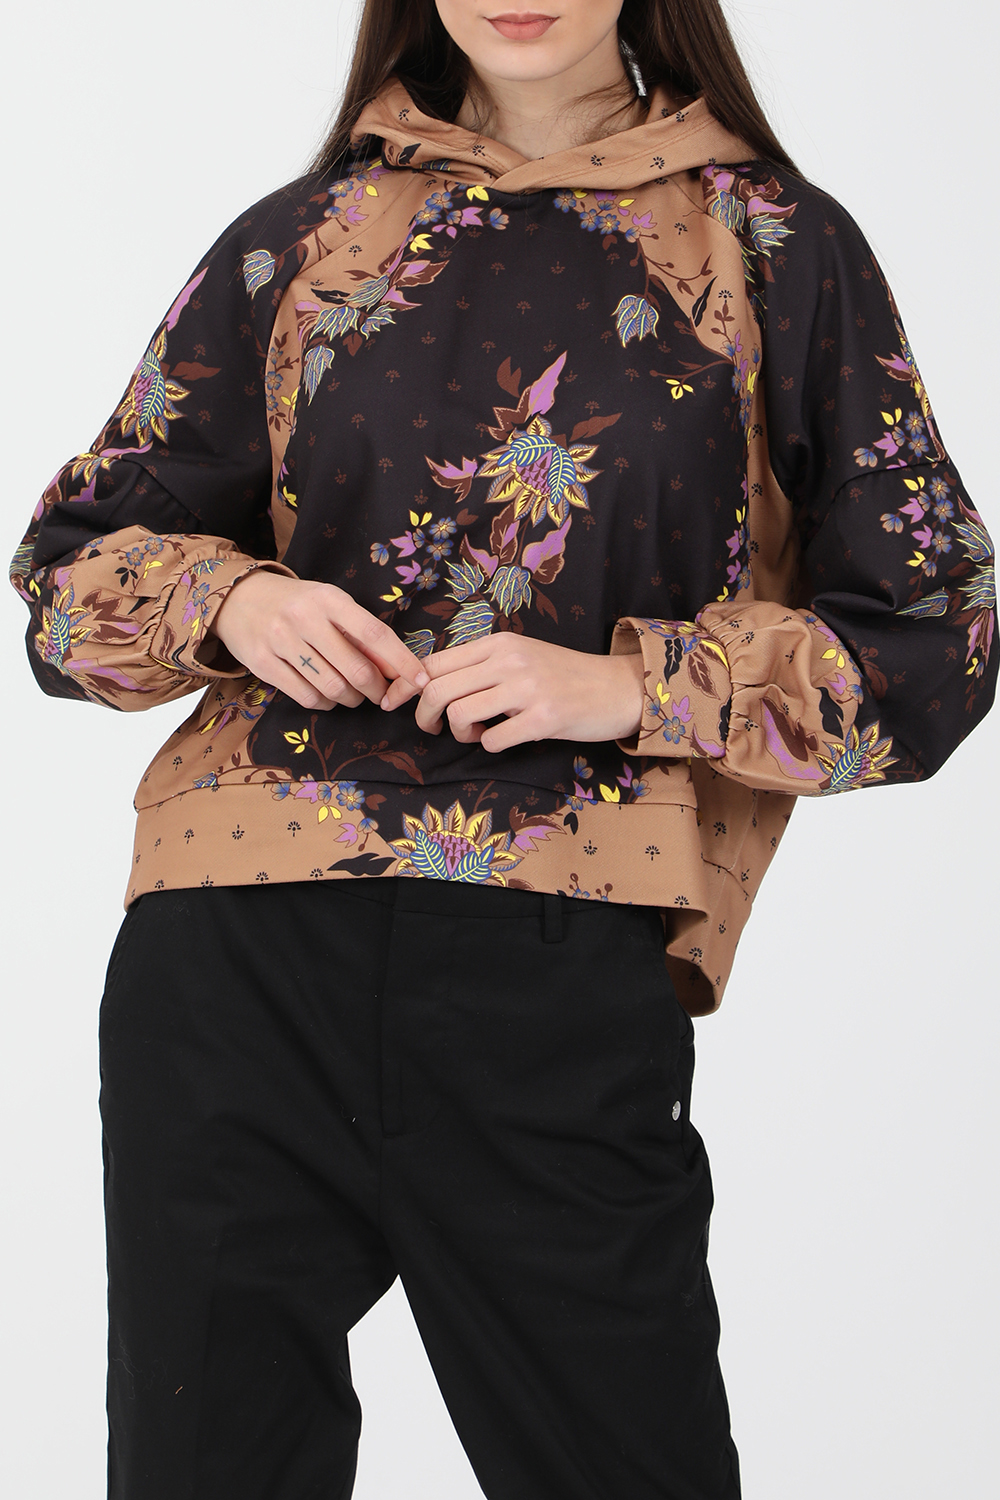 SCOTCH & SODA – Γυναικεία μπλούζα φούτερ SCOTCH & SODA Allover printed hoodie μαύρο μπεζ 1821070.0-0102